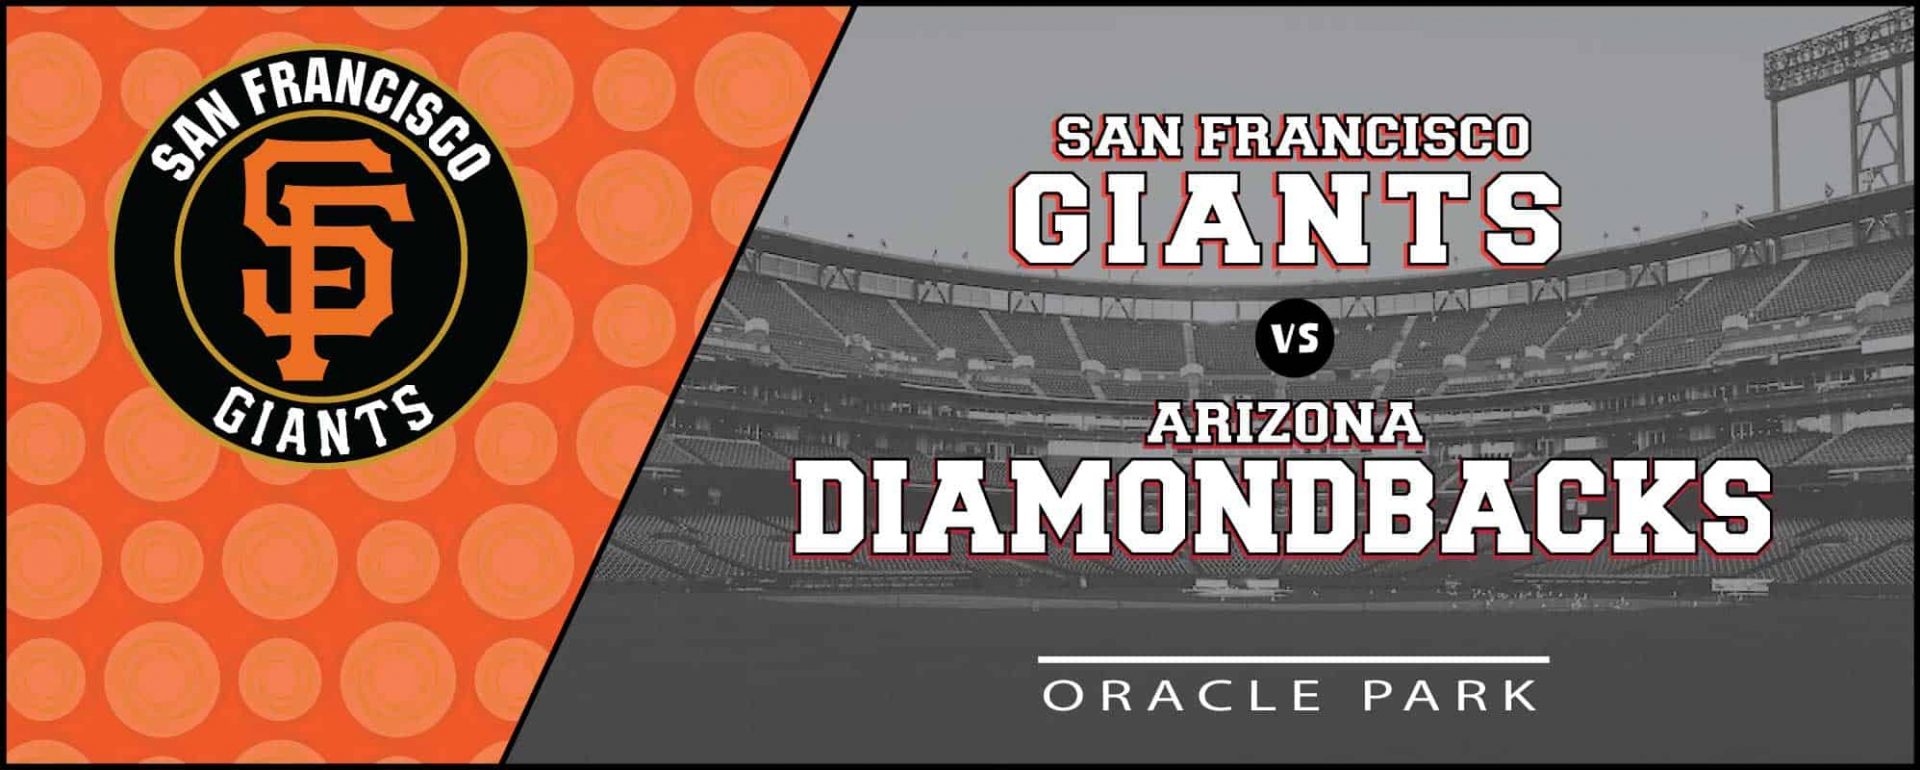 SF Giants Play the Arizona Diamondbacks